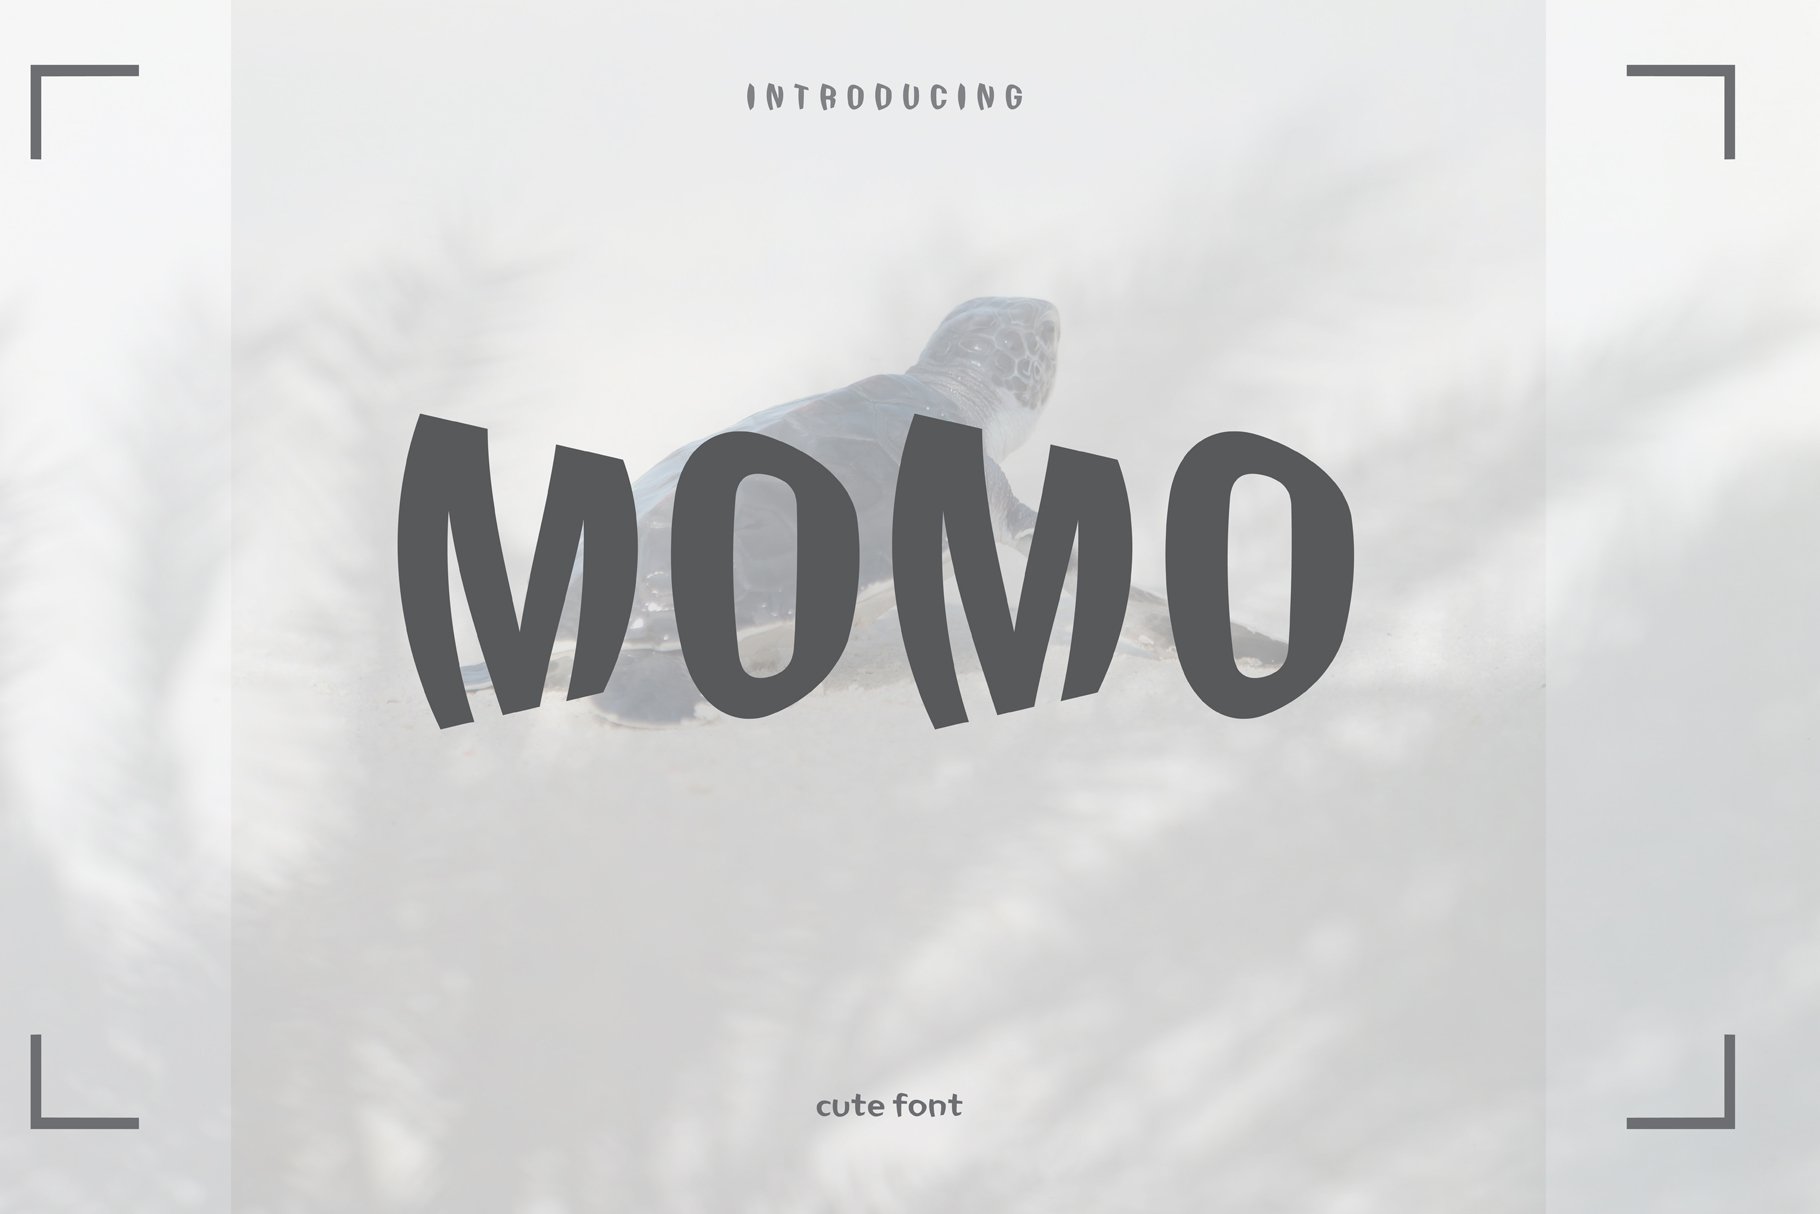 Momo cover image.